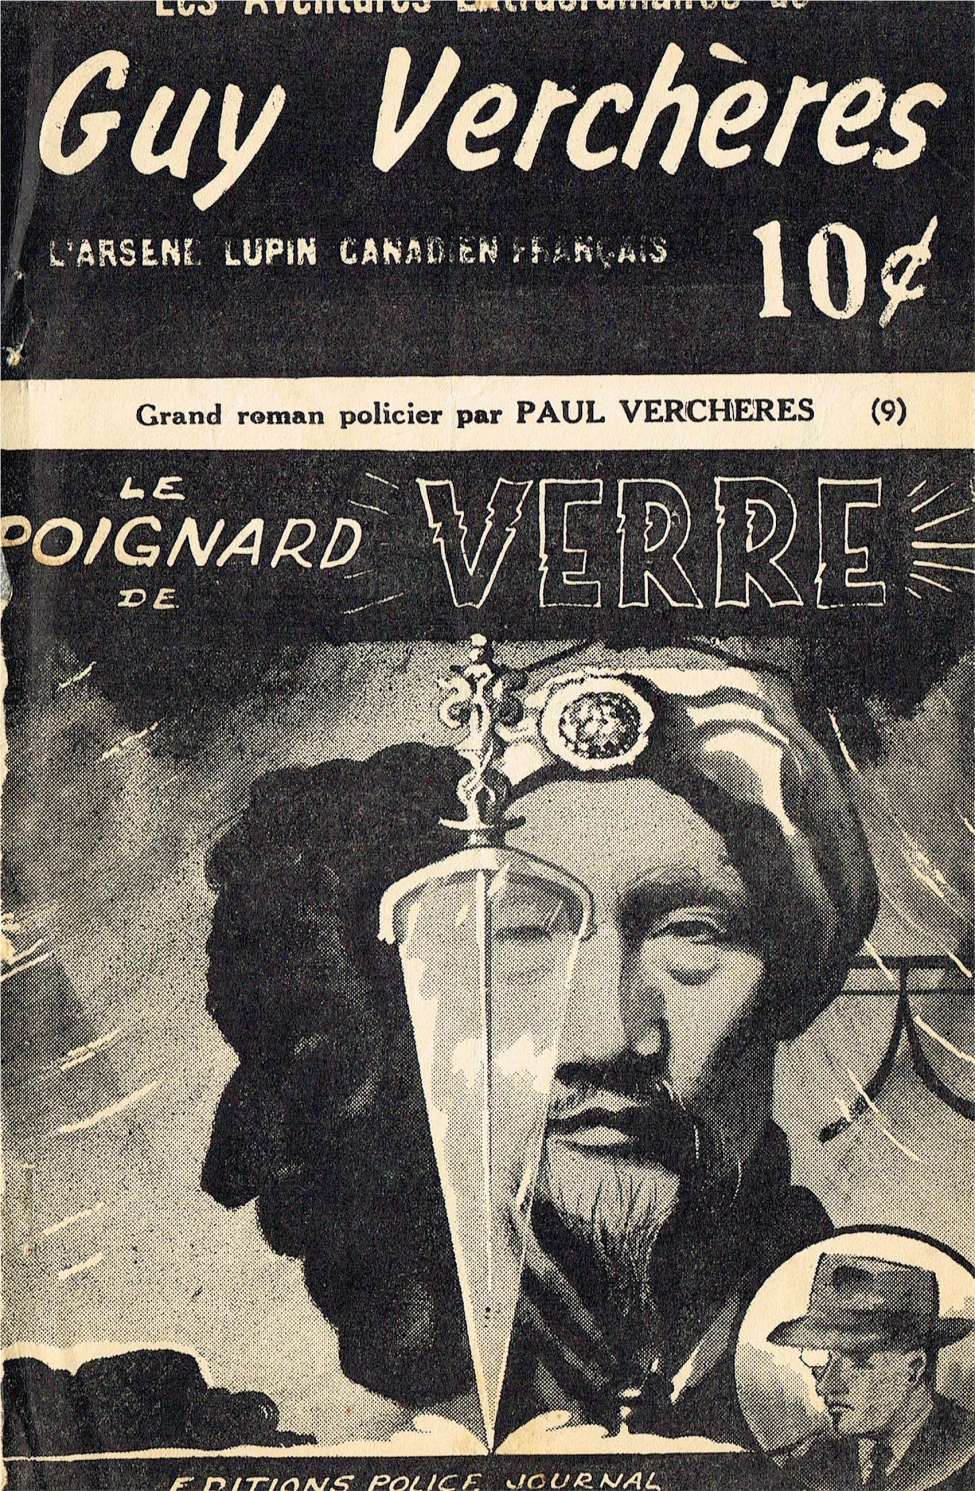 Book Cover For Guy-Vercheres v2 9 - Le poignard de verre